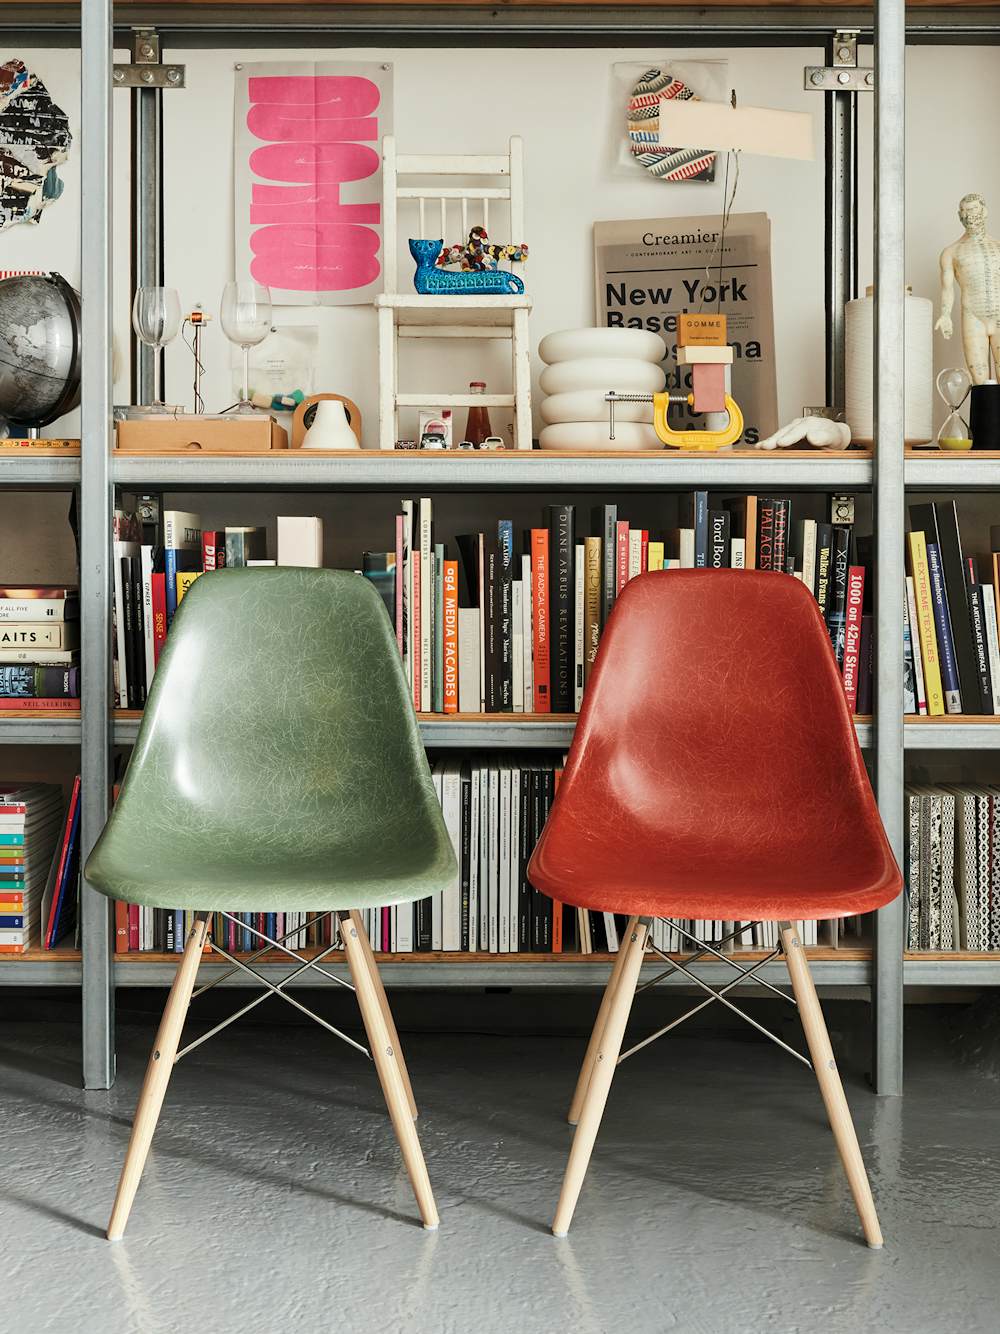 Eames Molded Fiberglass Side Chair